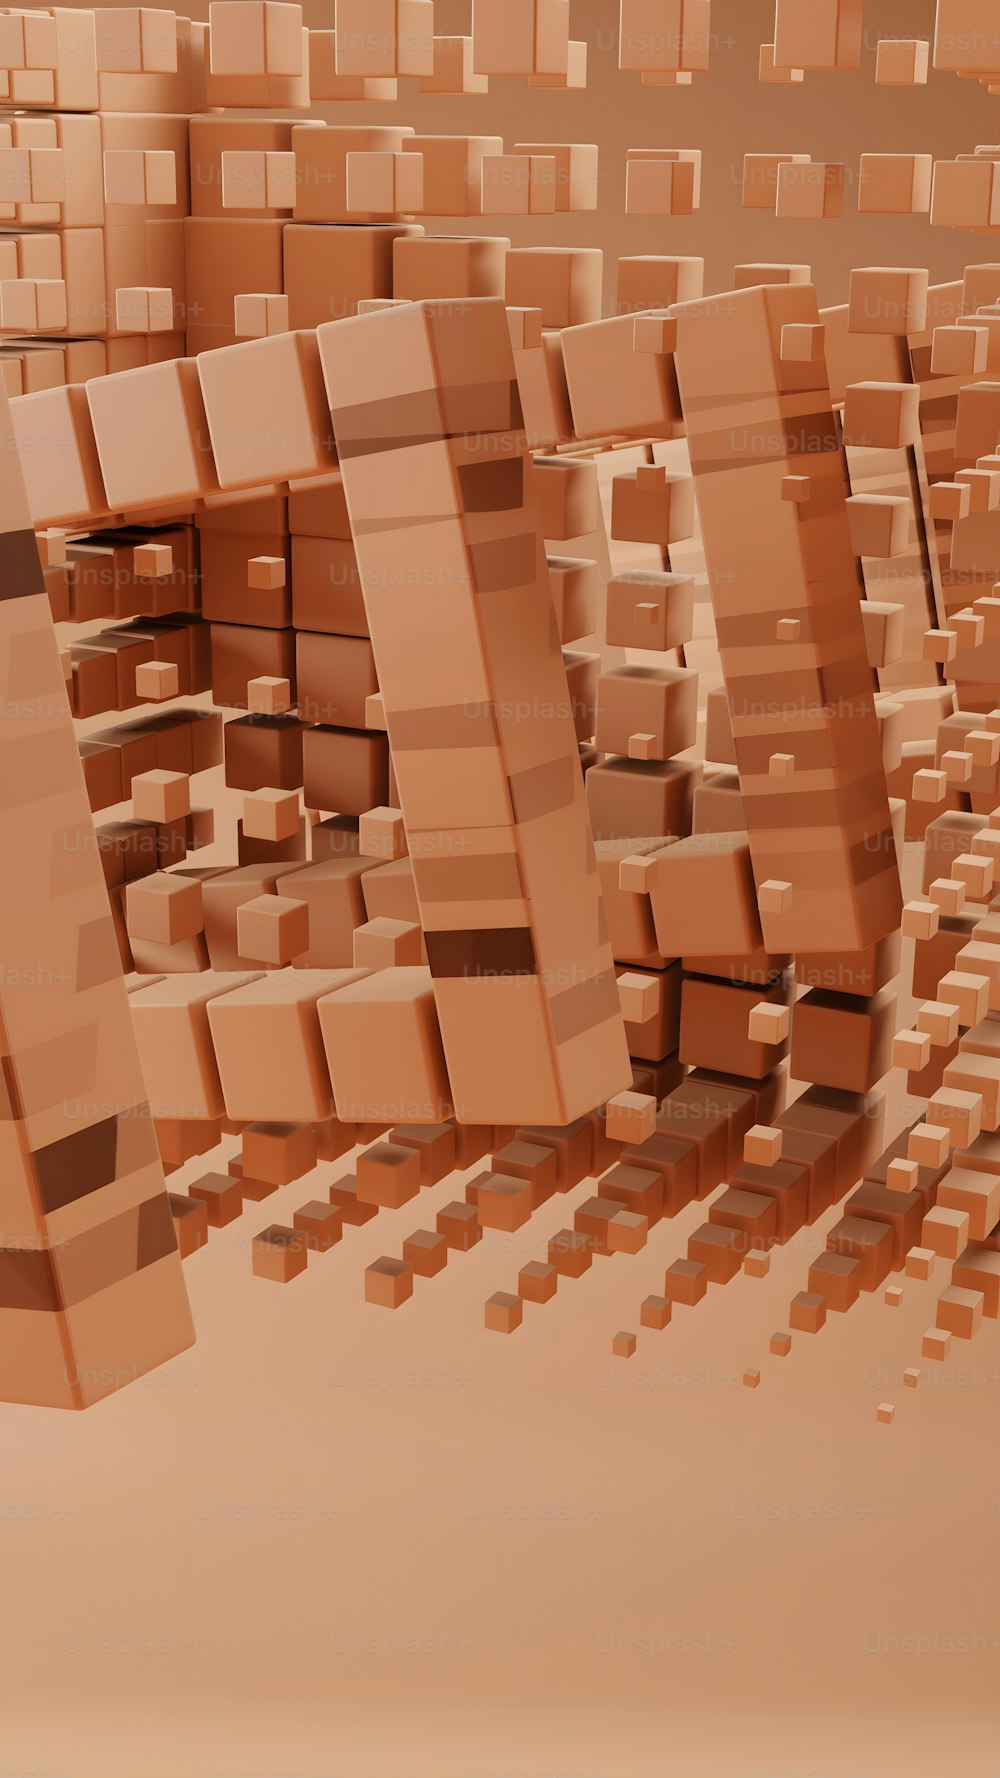 Una imagen abstracta de un grupo de cubos